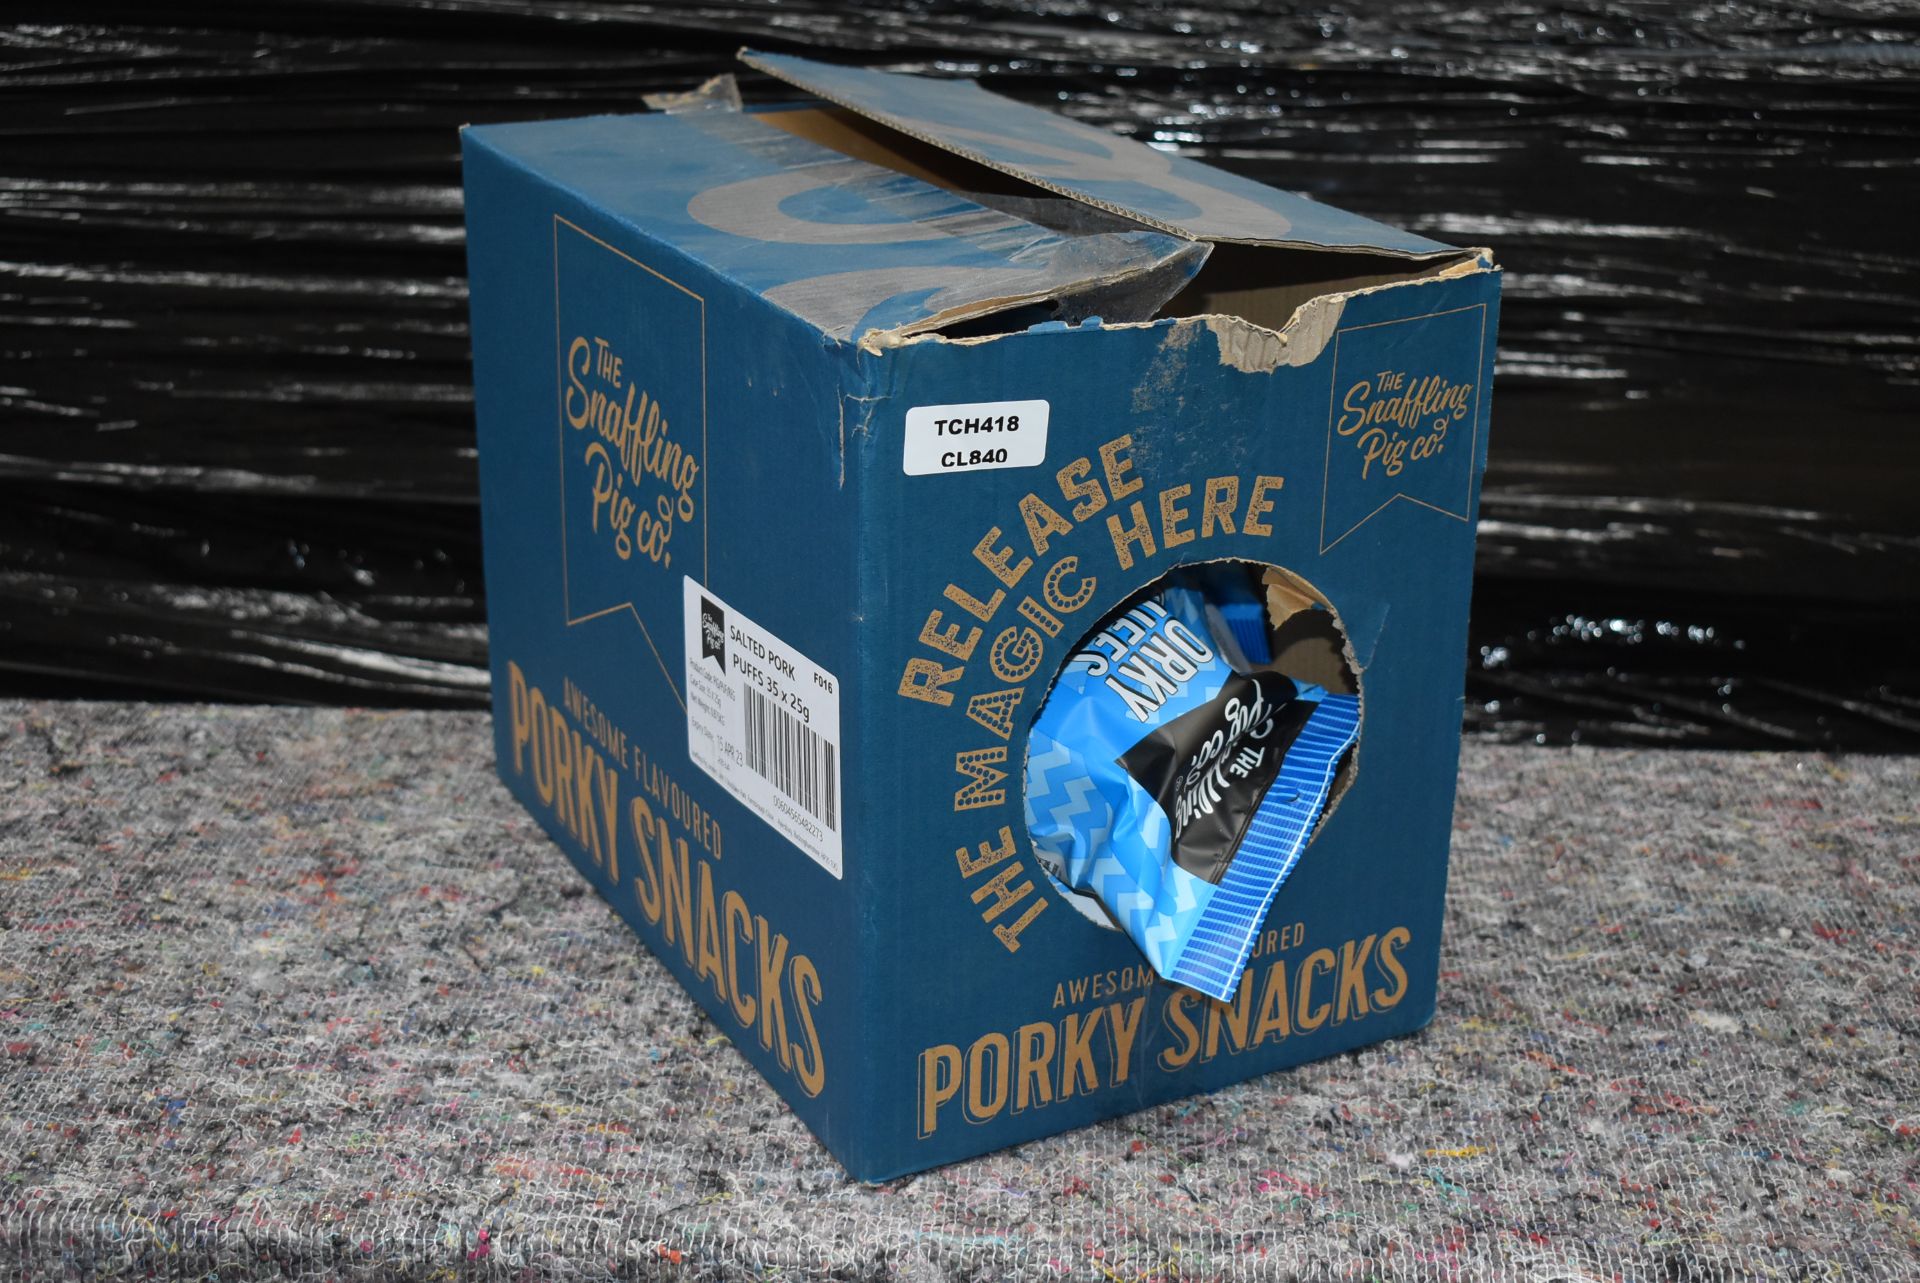 1 x Box of The Snaffling Pig Co. Pork Crisps